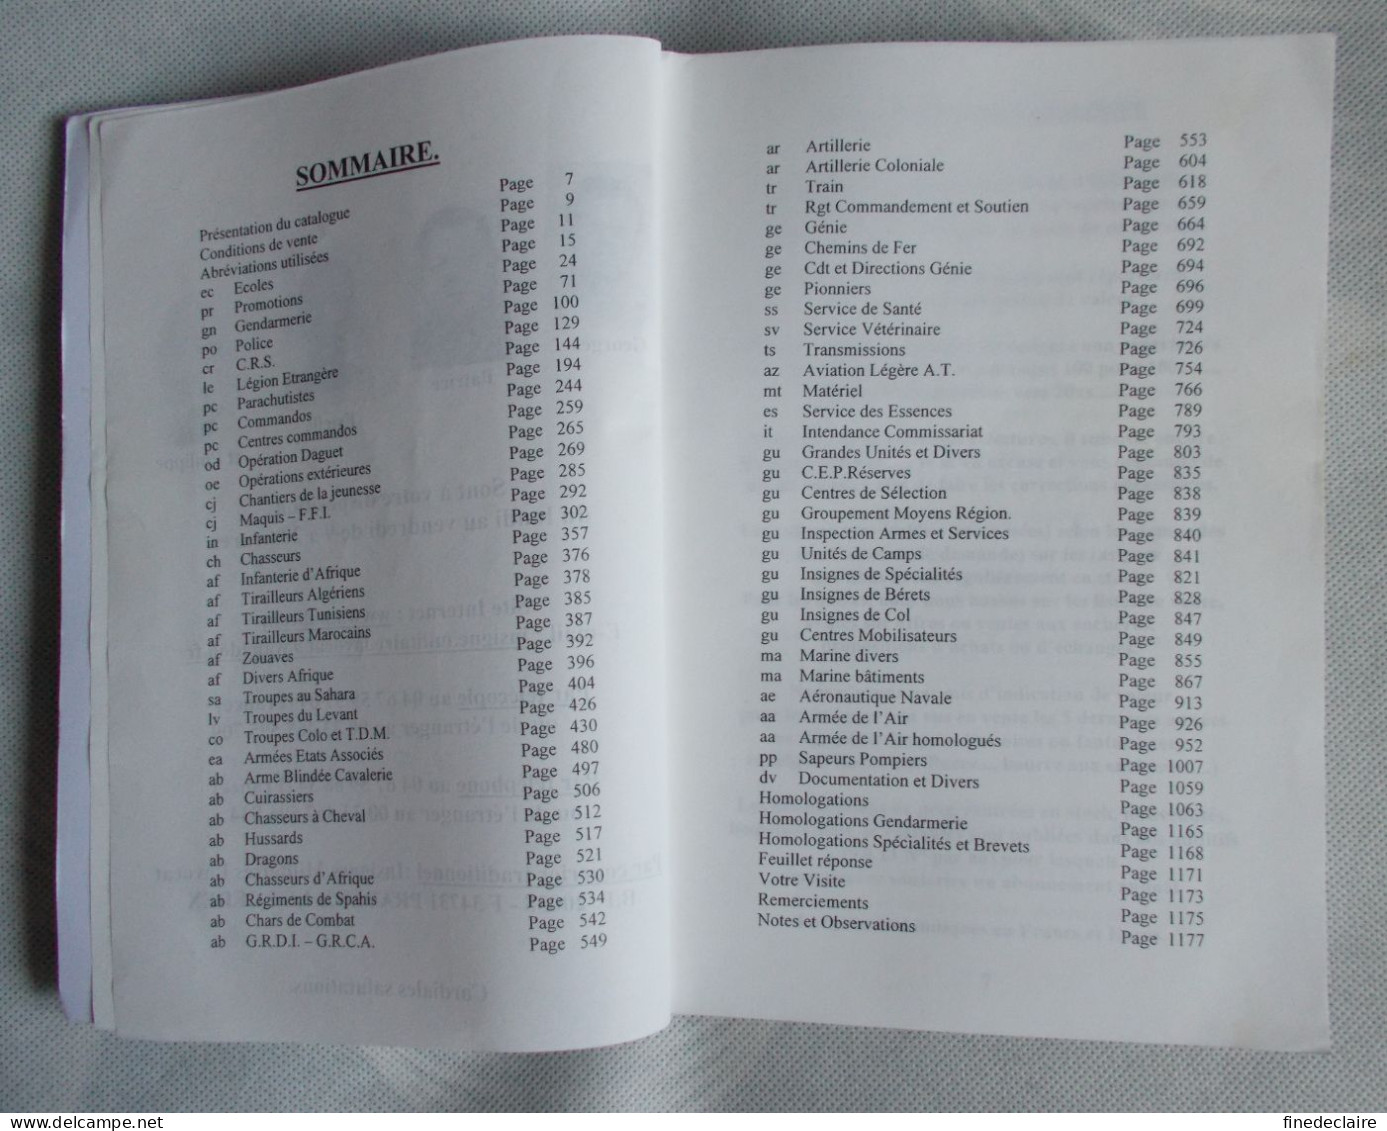 Catalogue - Insignes Militaires Lavocat 2003 - 1184 Pages - Francia